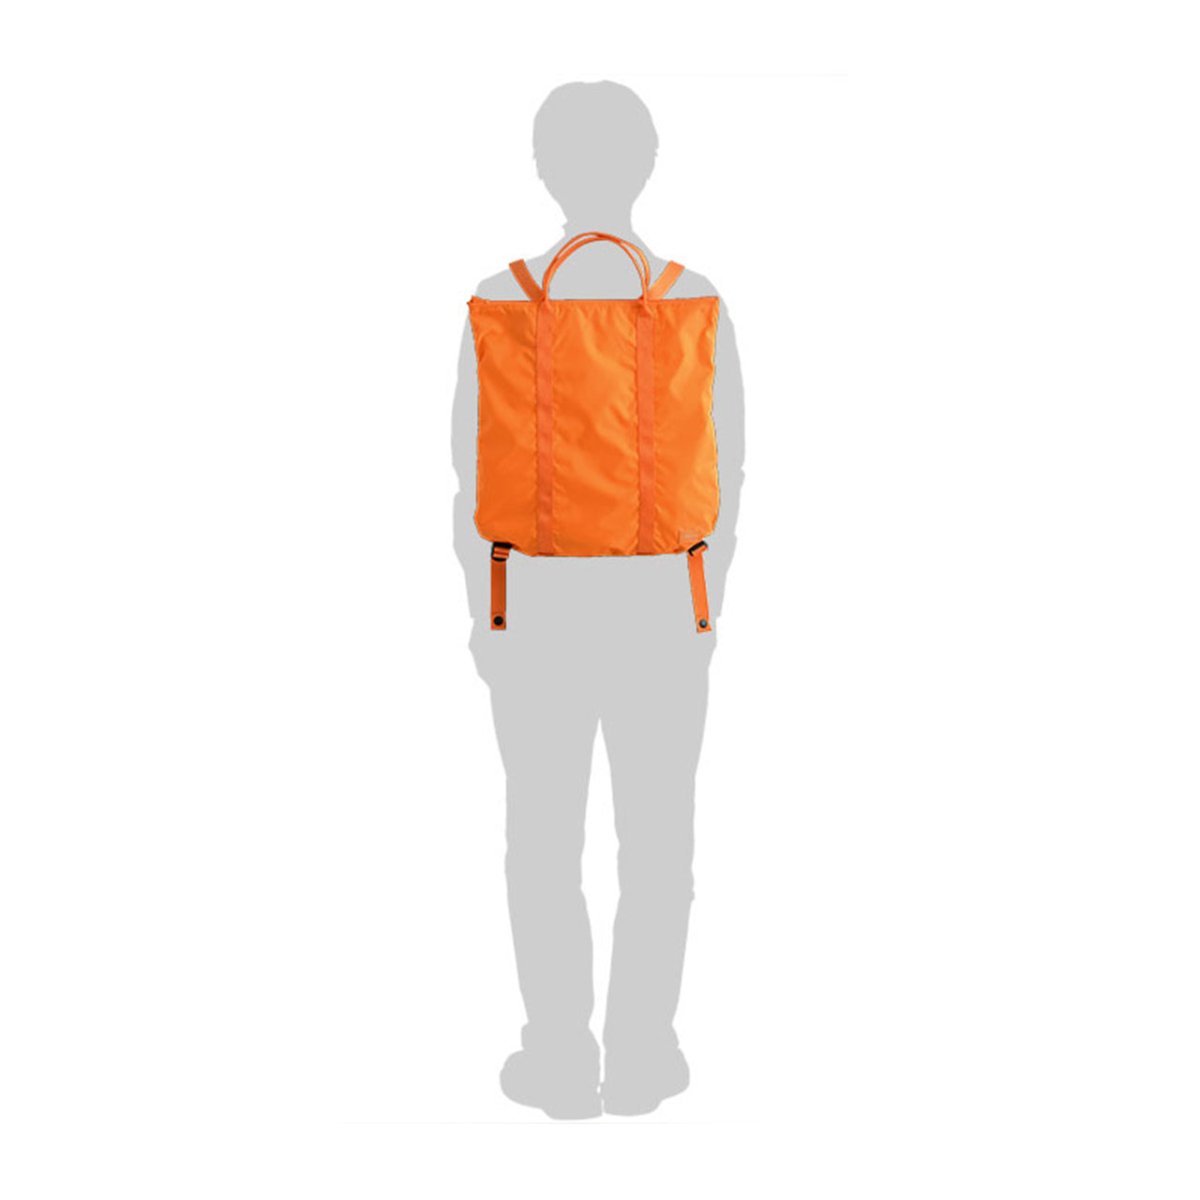 Porter by Yoshida Flex 2 Way Tote Bag (Orange)  - Allike Store